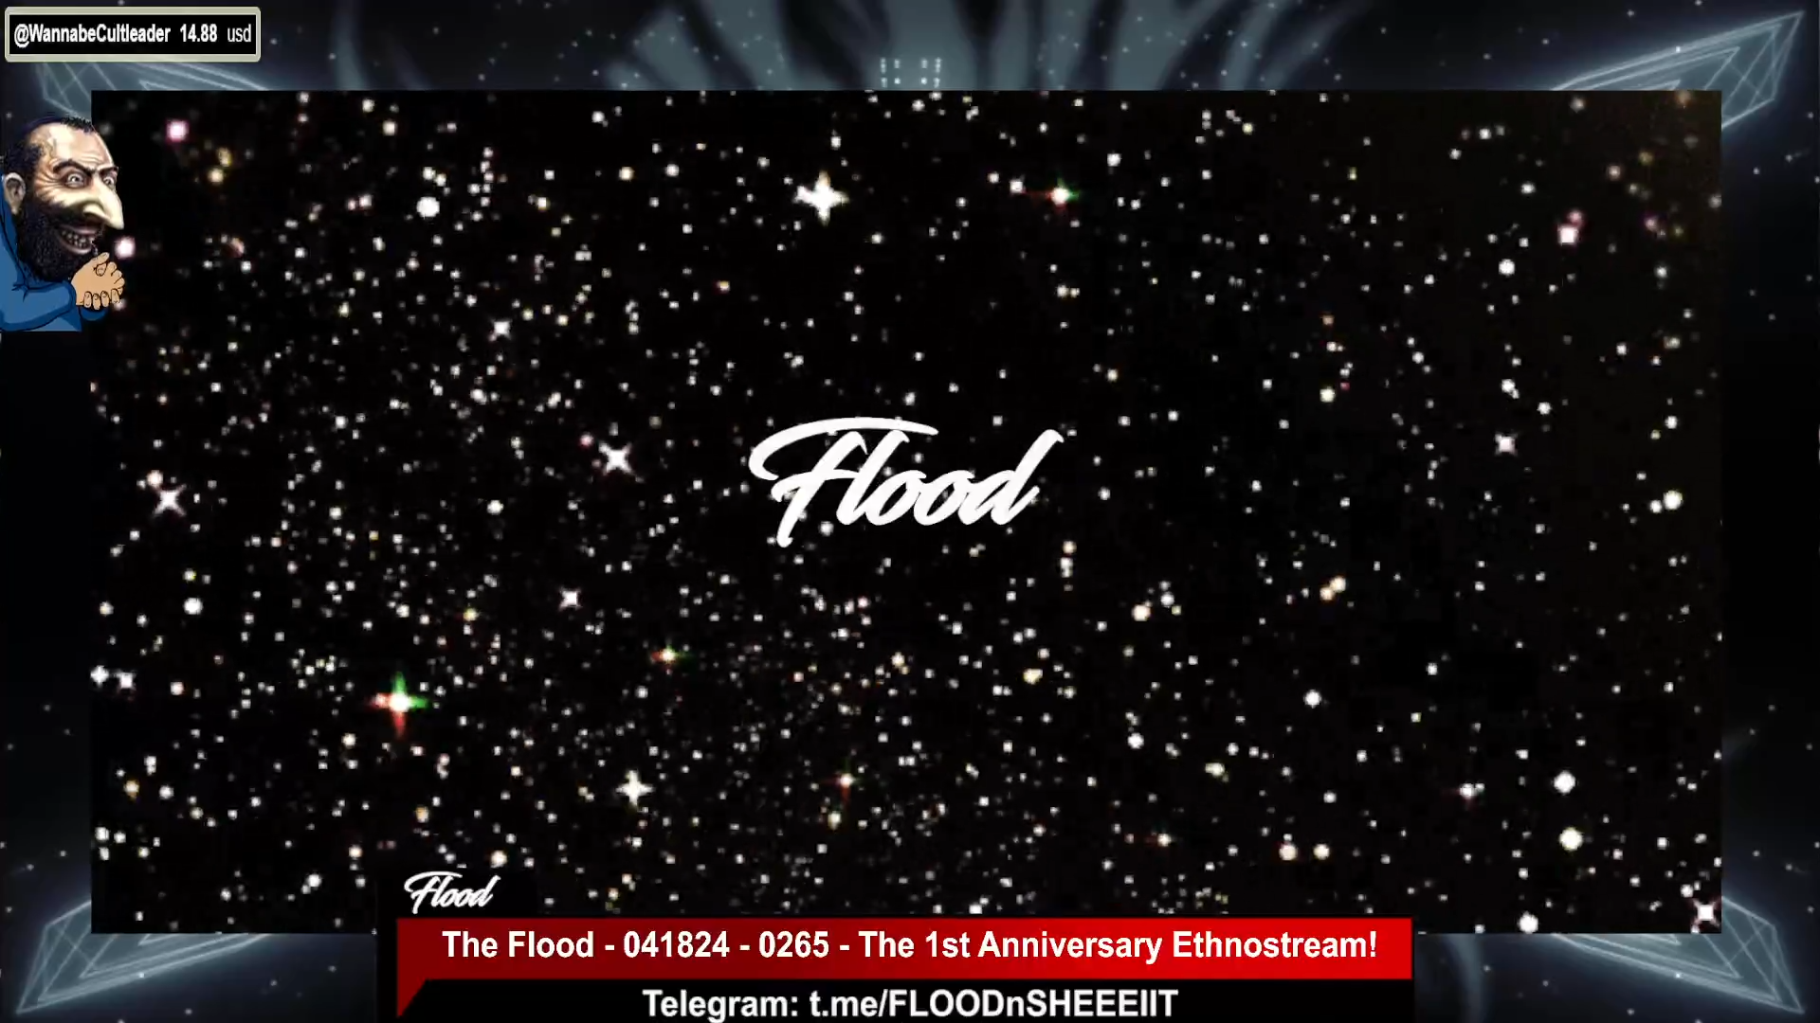 The Flood - 041824 - 0265 - The 1st Anniversary Ethnostream!